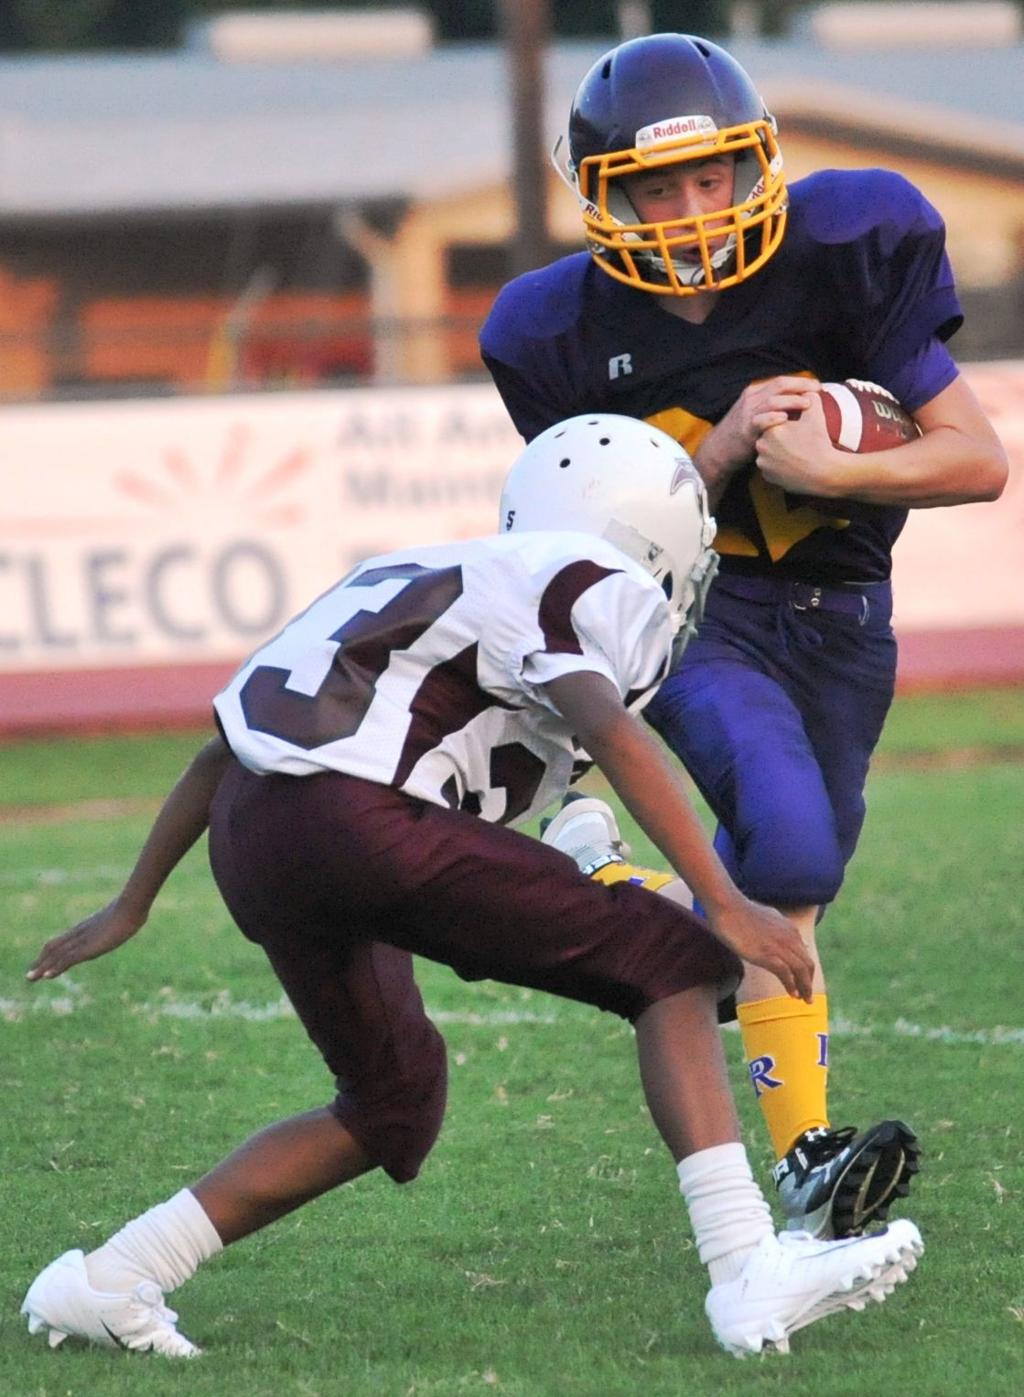 Covington Junior High Football jamboree | St. Tammany community news |  